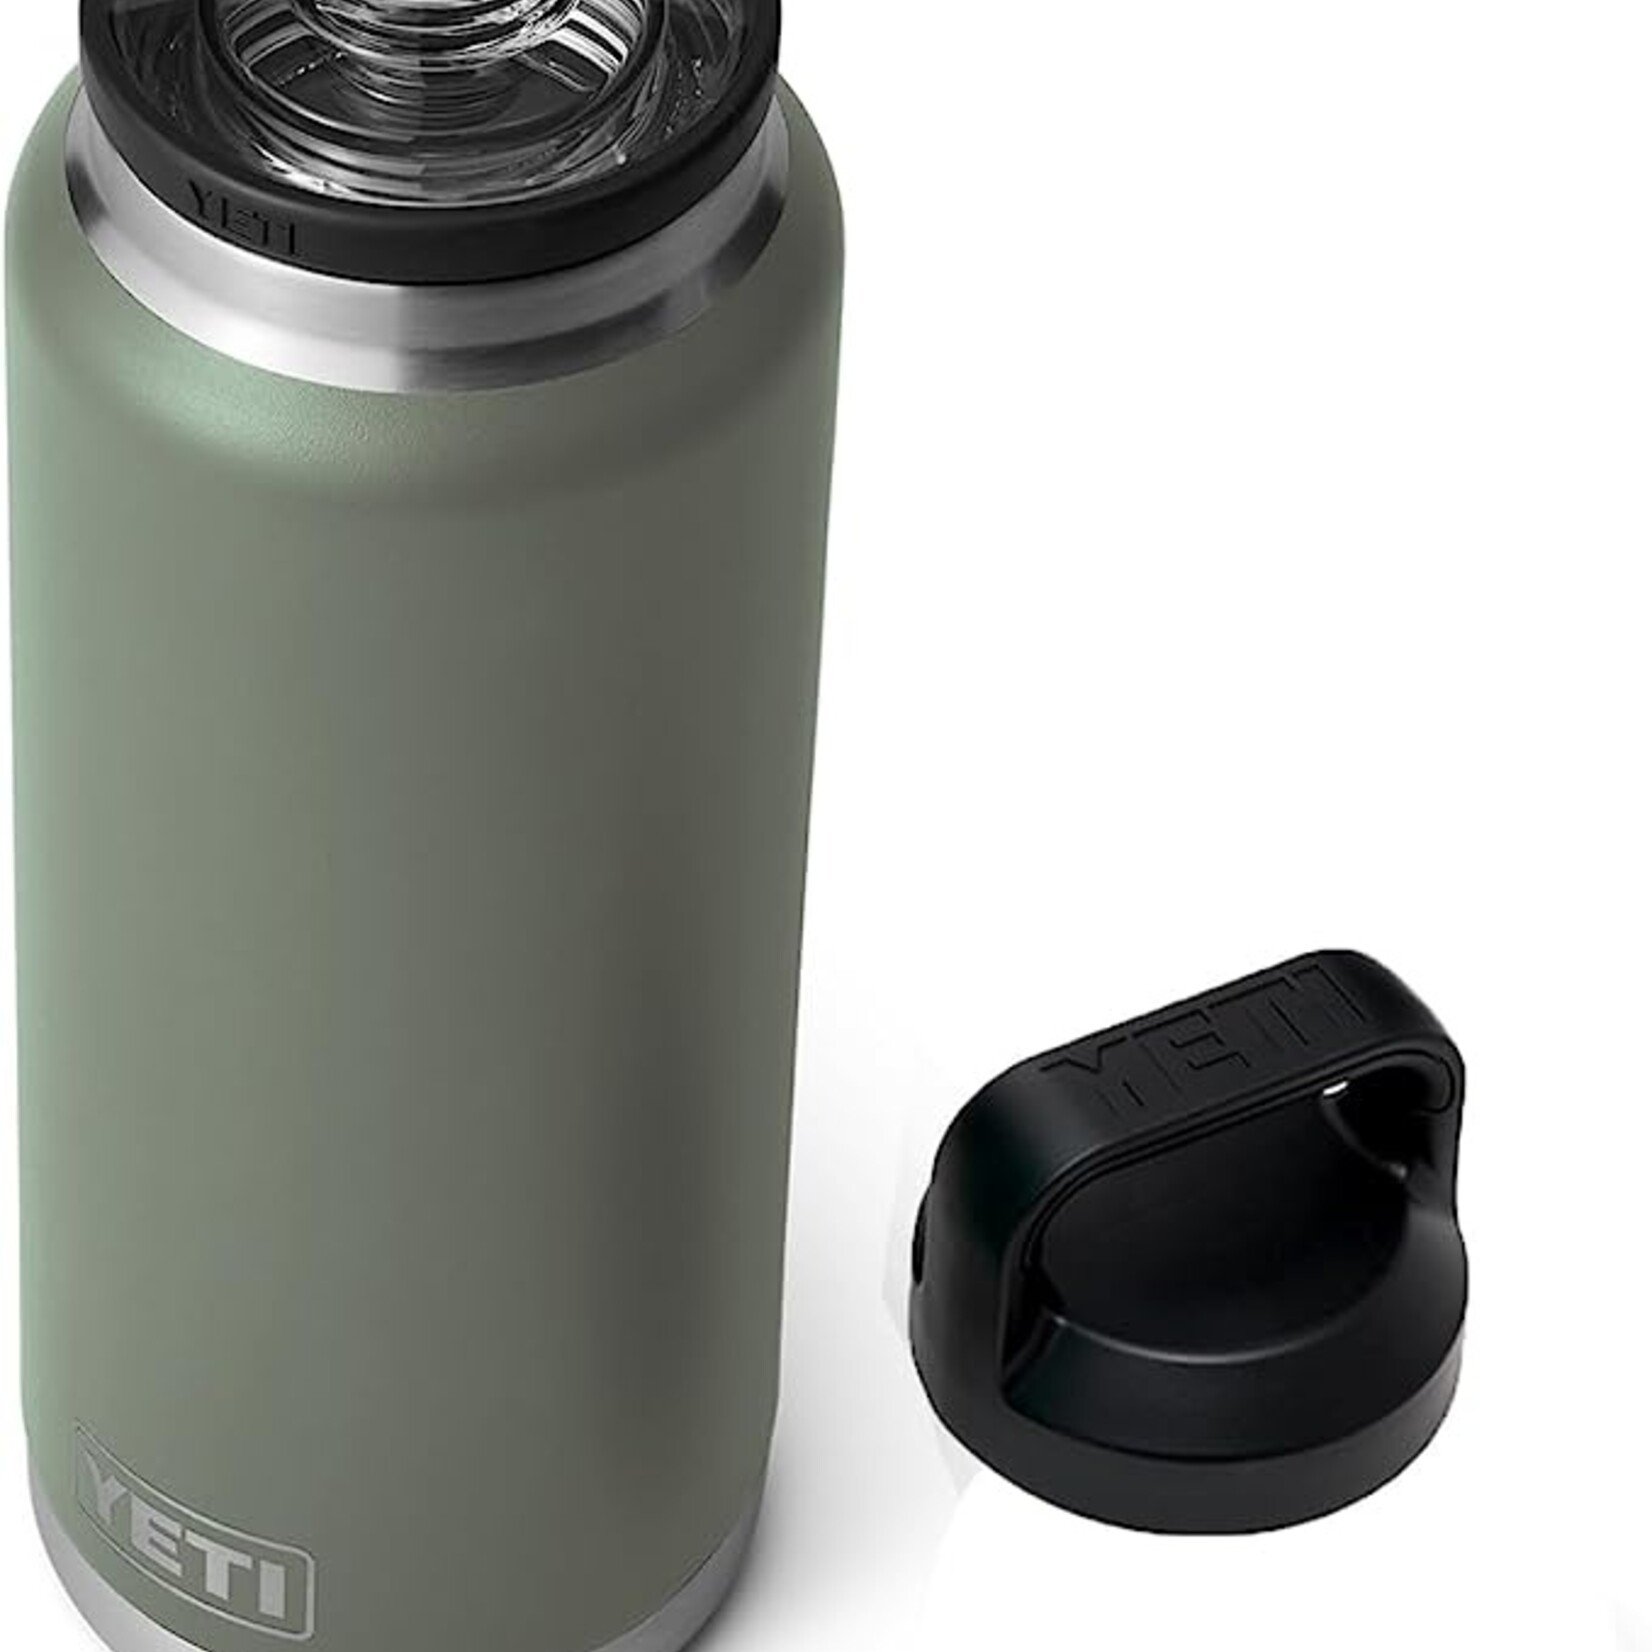 Yeti Rambler 36oz Bottle with Chug Cap – Reef & Reel